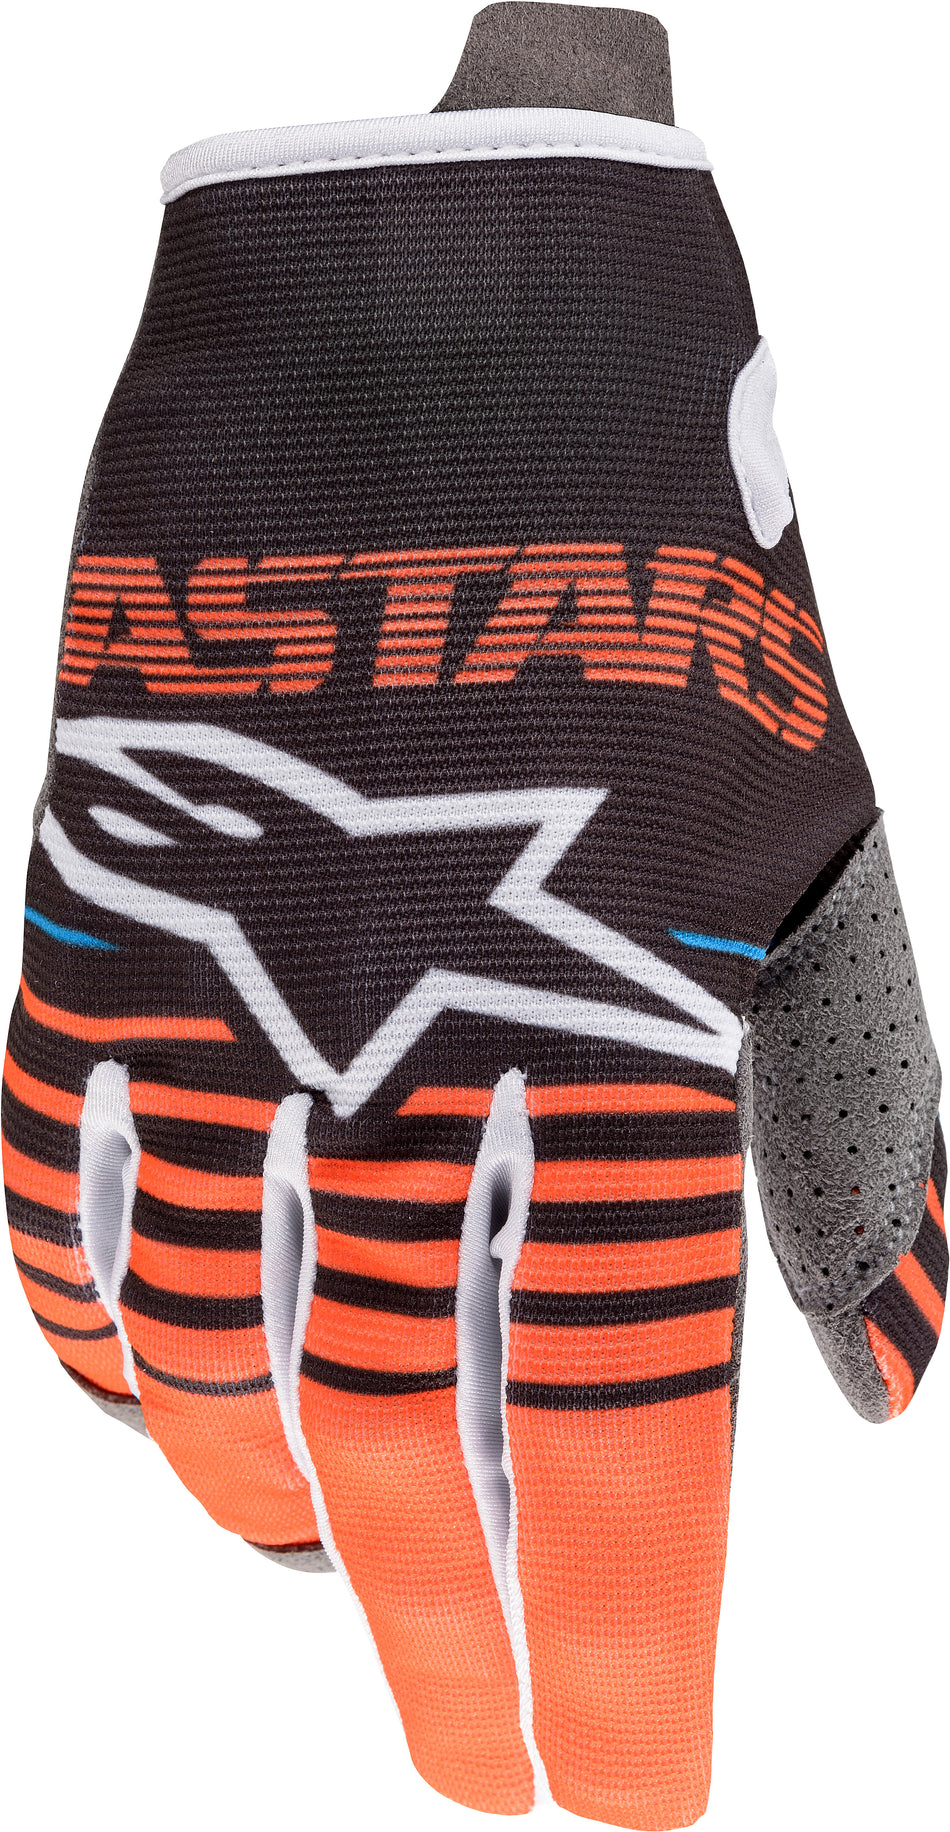 ALPINESTARS Youth Radar Gloves Anthracite/Orange Lg 3541820-1444-L